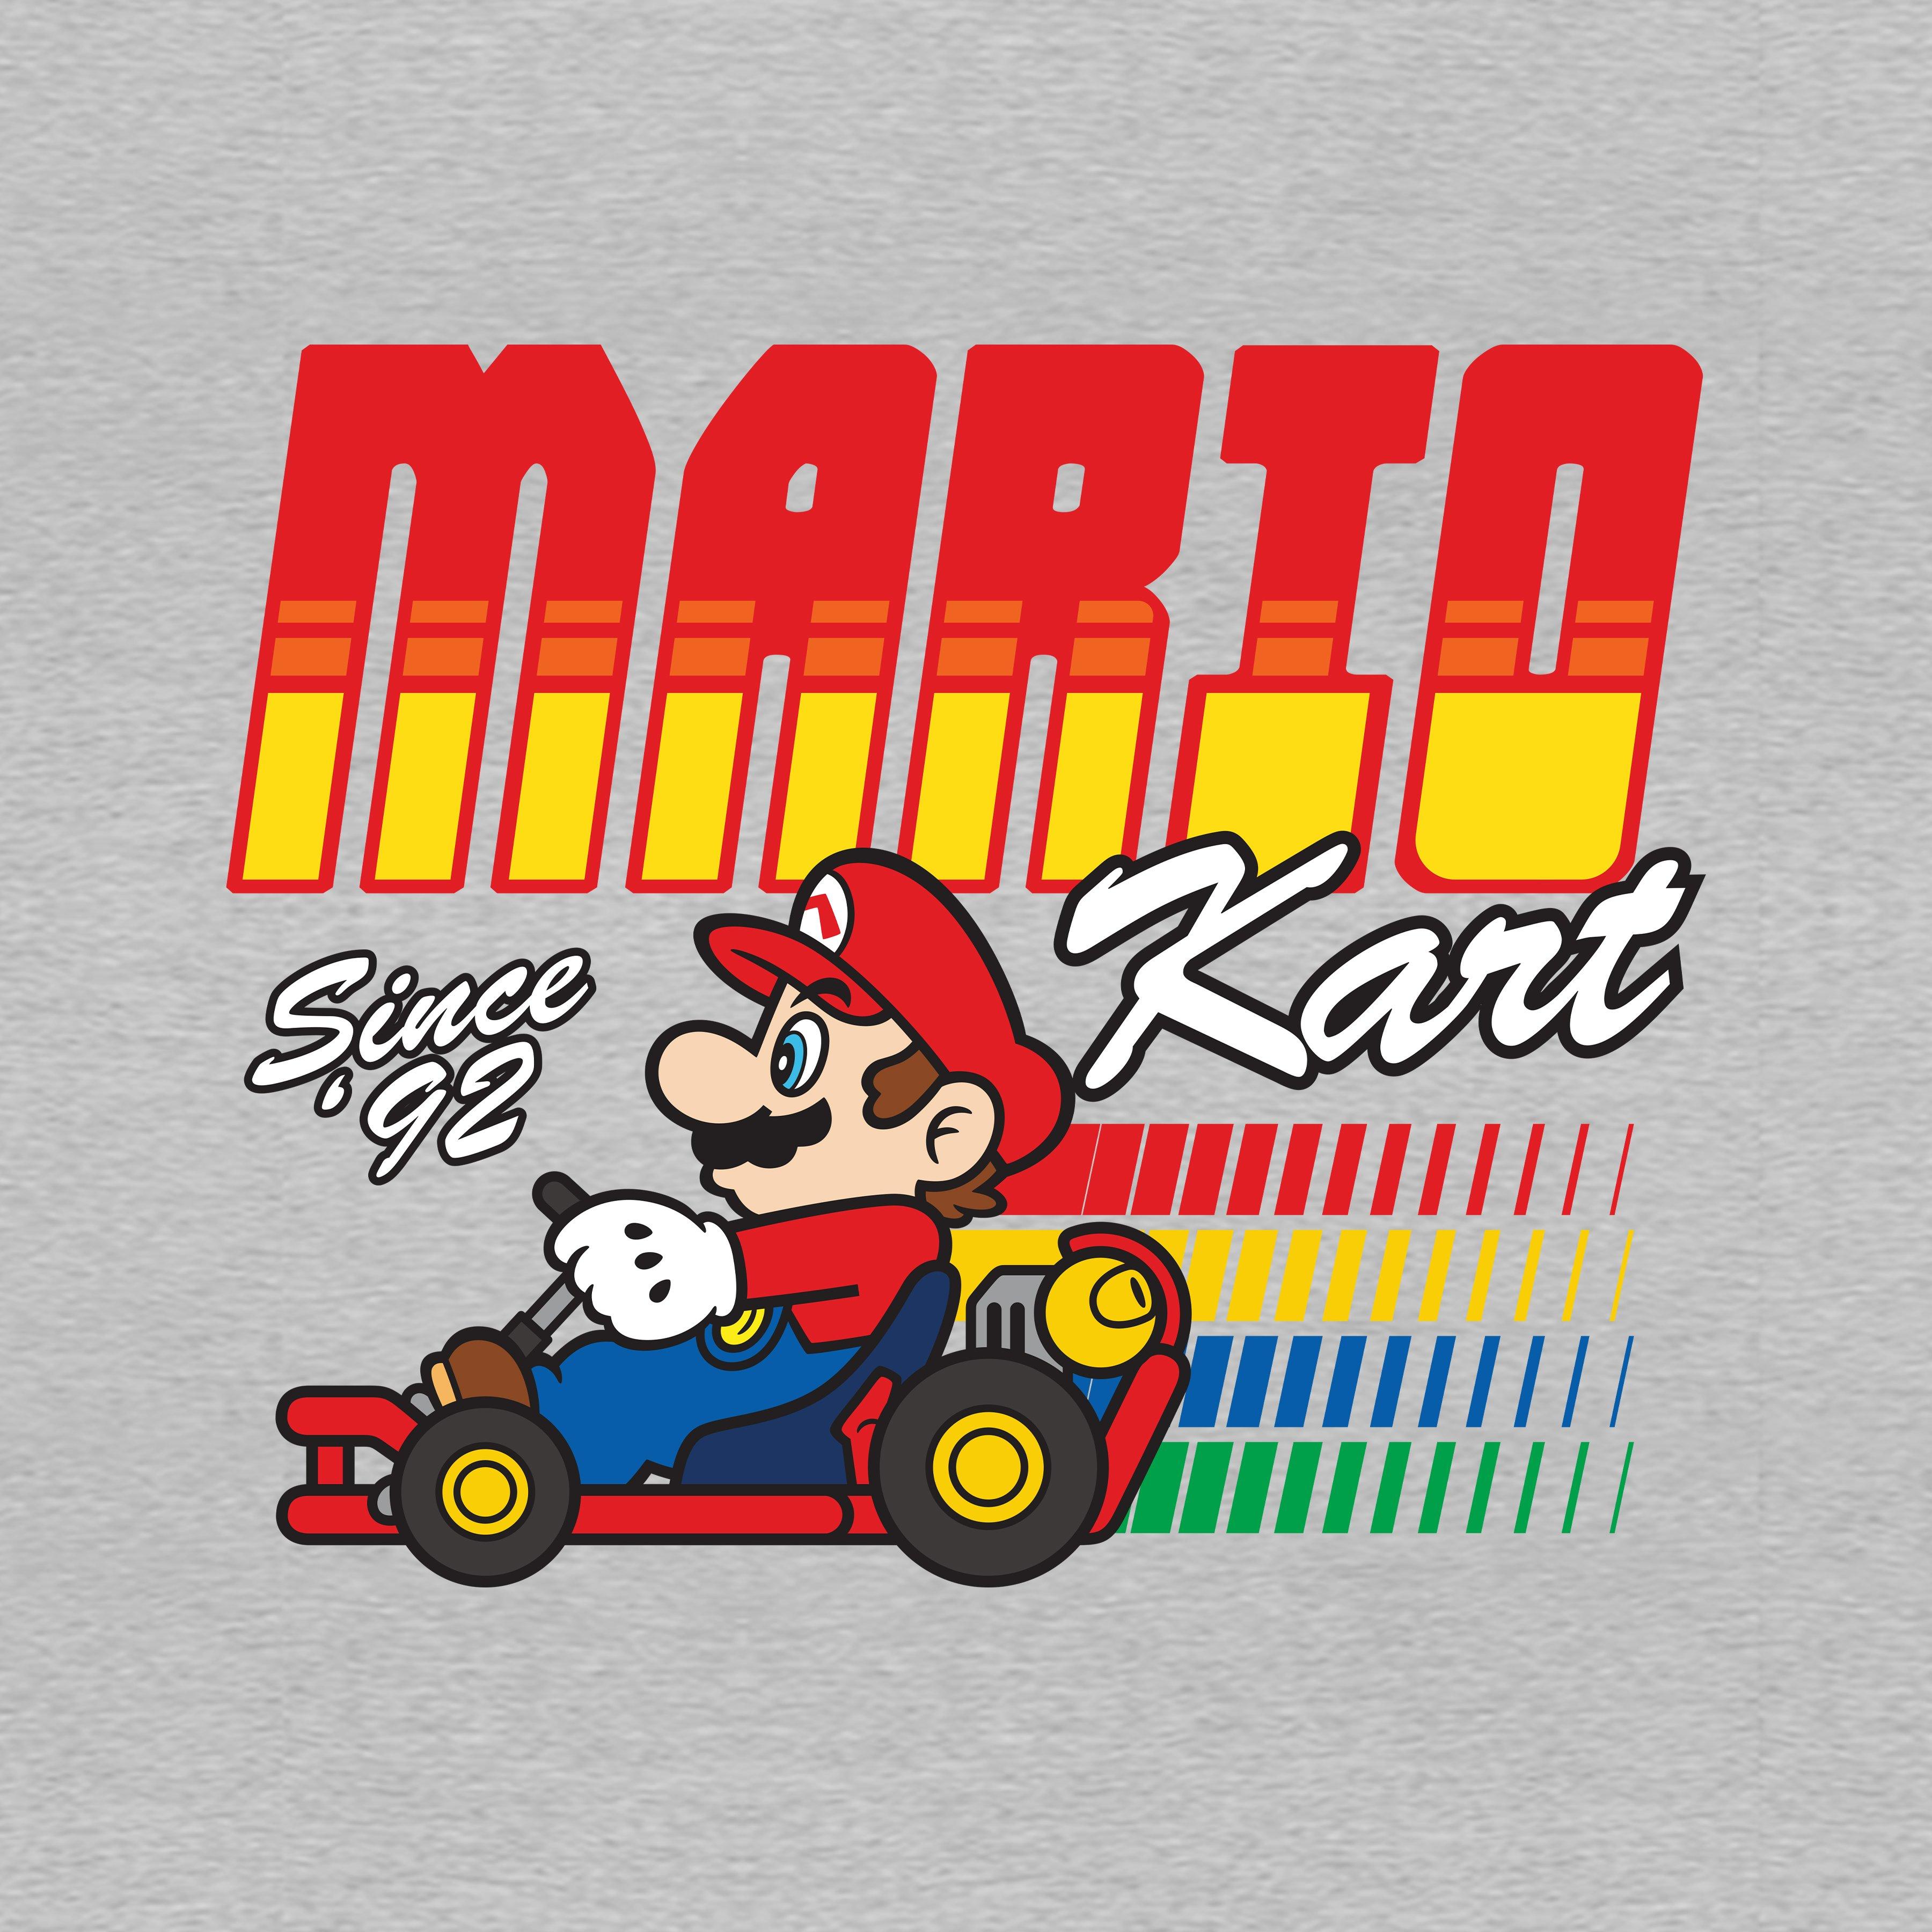 Mario Kart Grand Prix Short Sleeve Unisex Cotton T-Shirt GameStop Exclusive